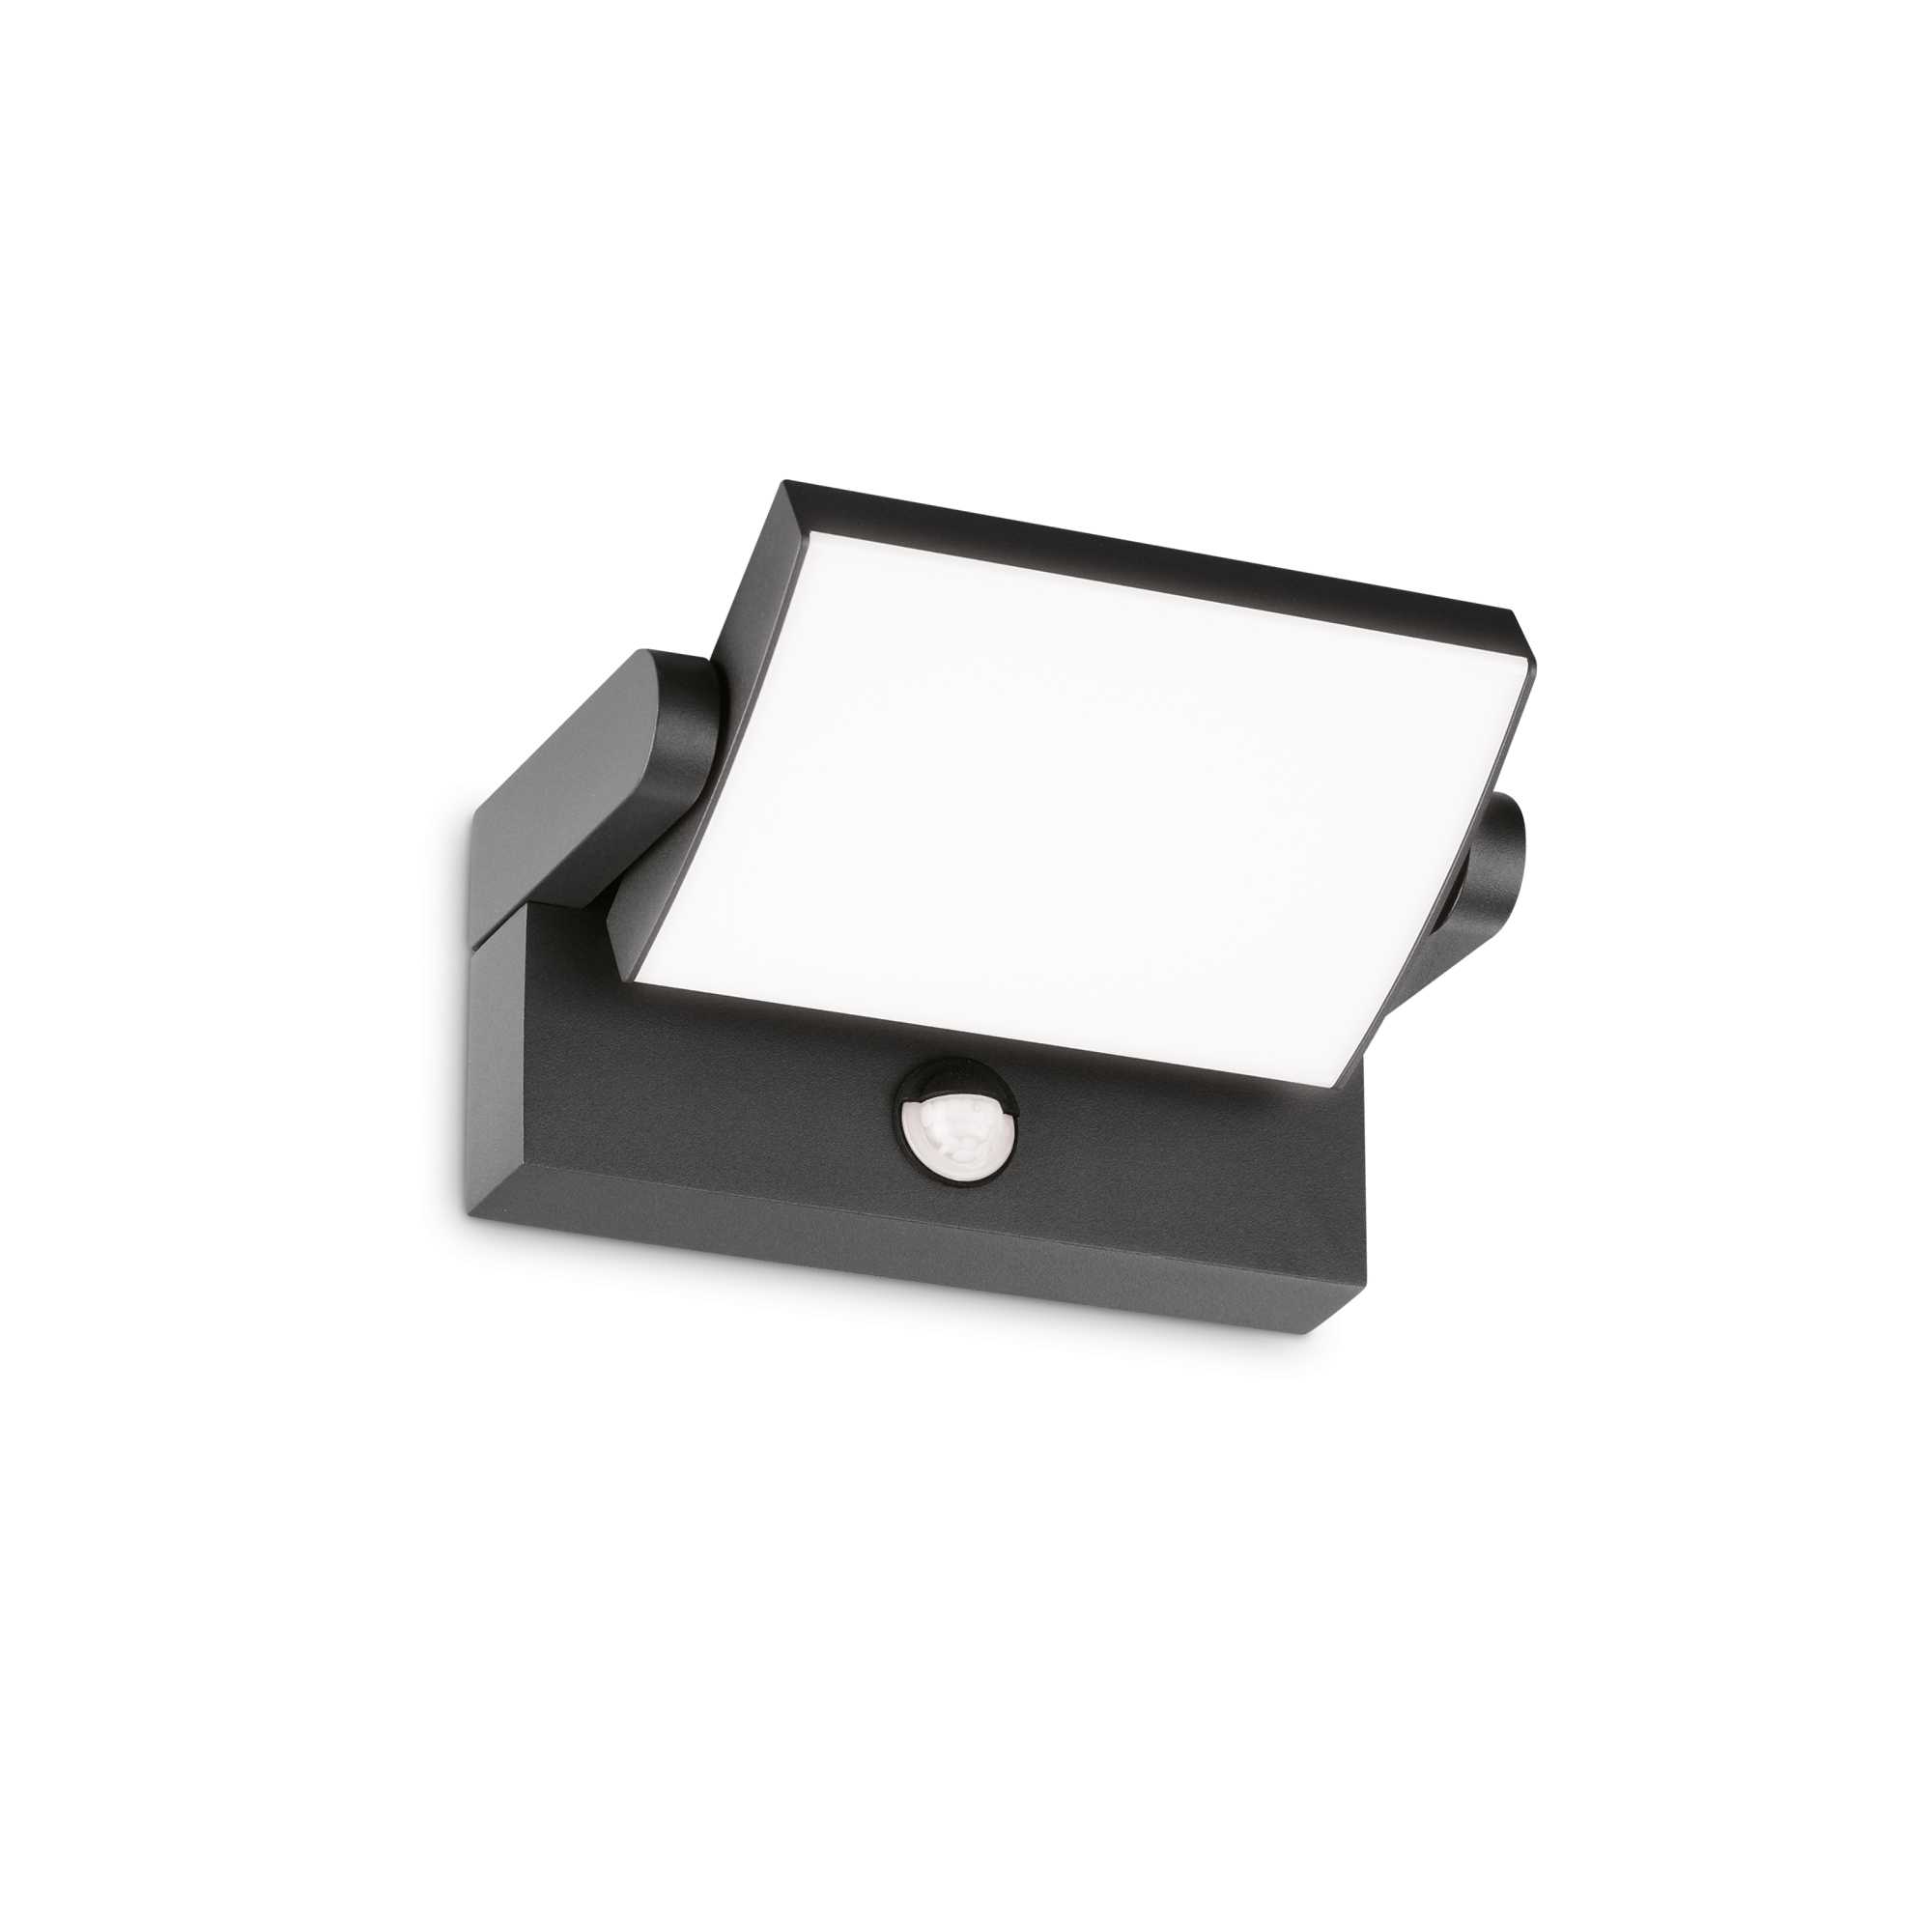 AD hotelska oprema Vanjska zidna lampa Swipe ap sensor- Antracit slika proizvoda